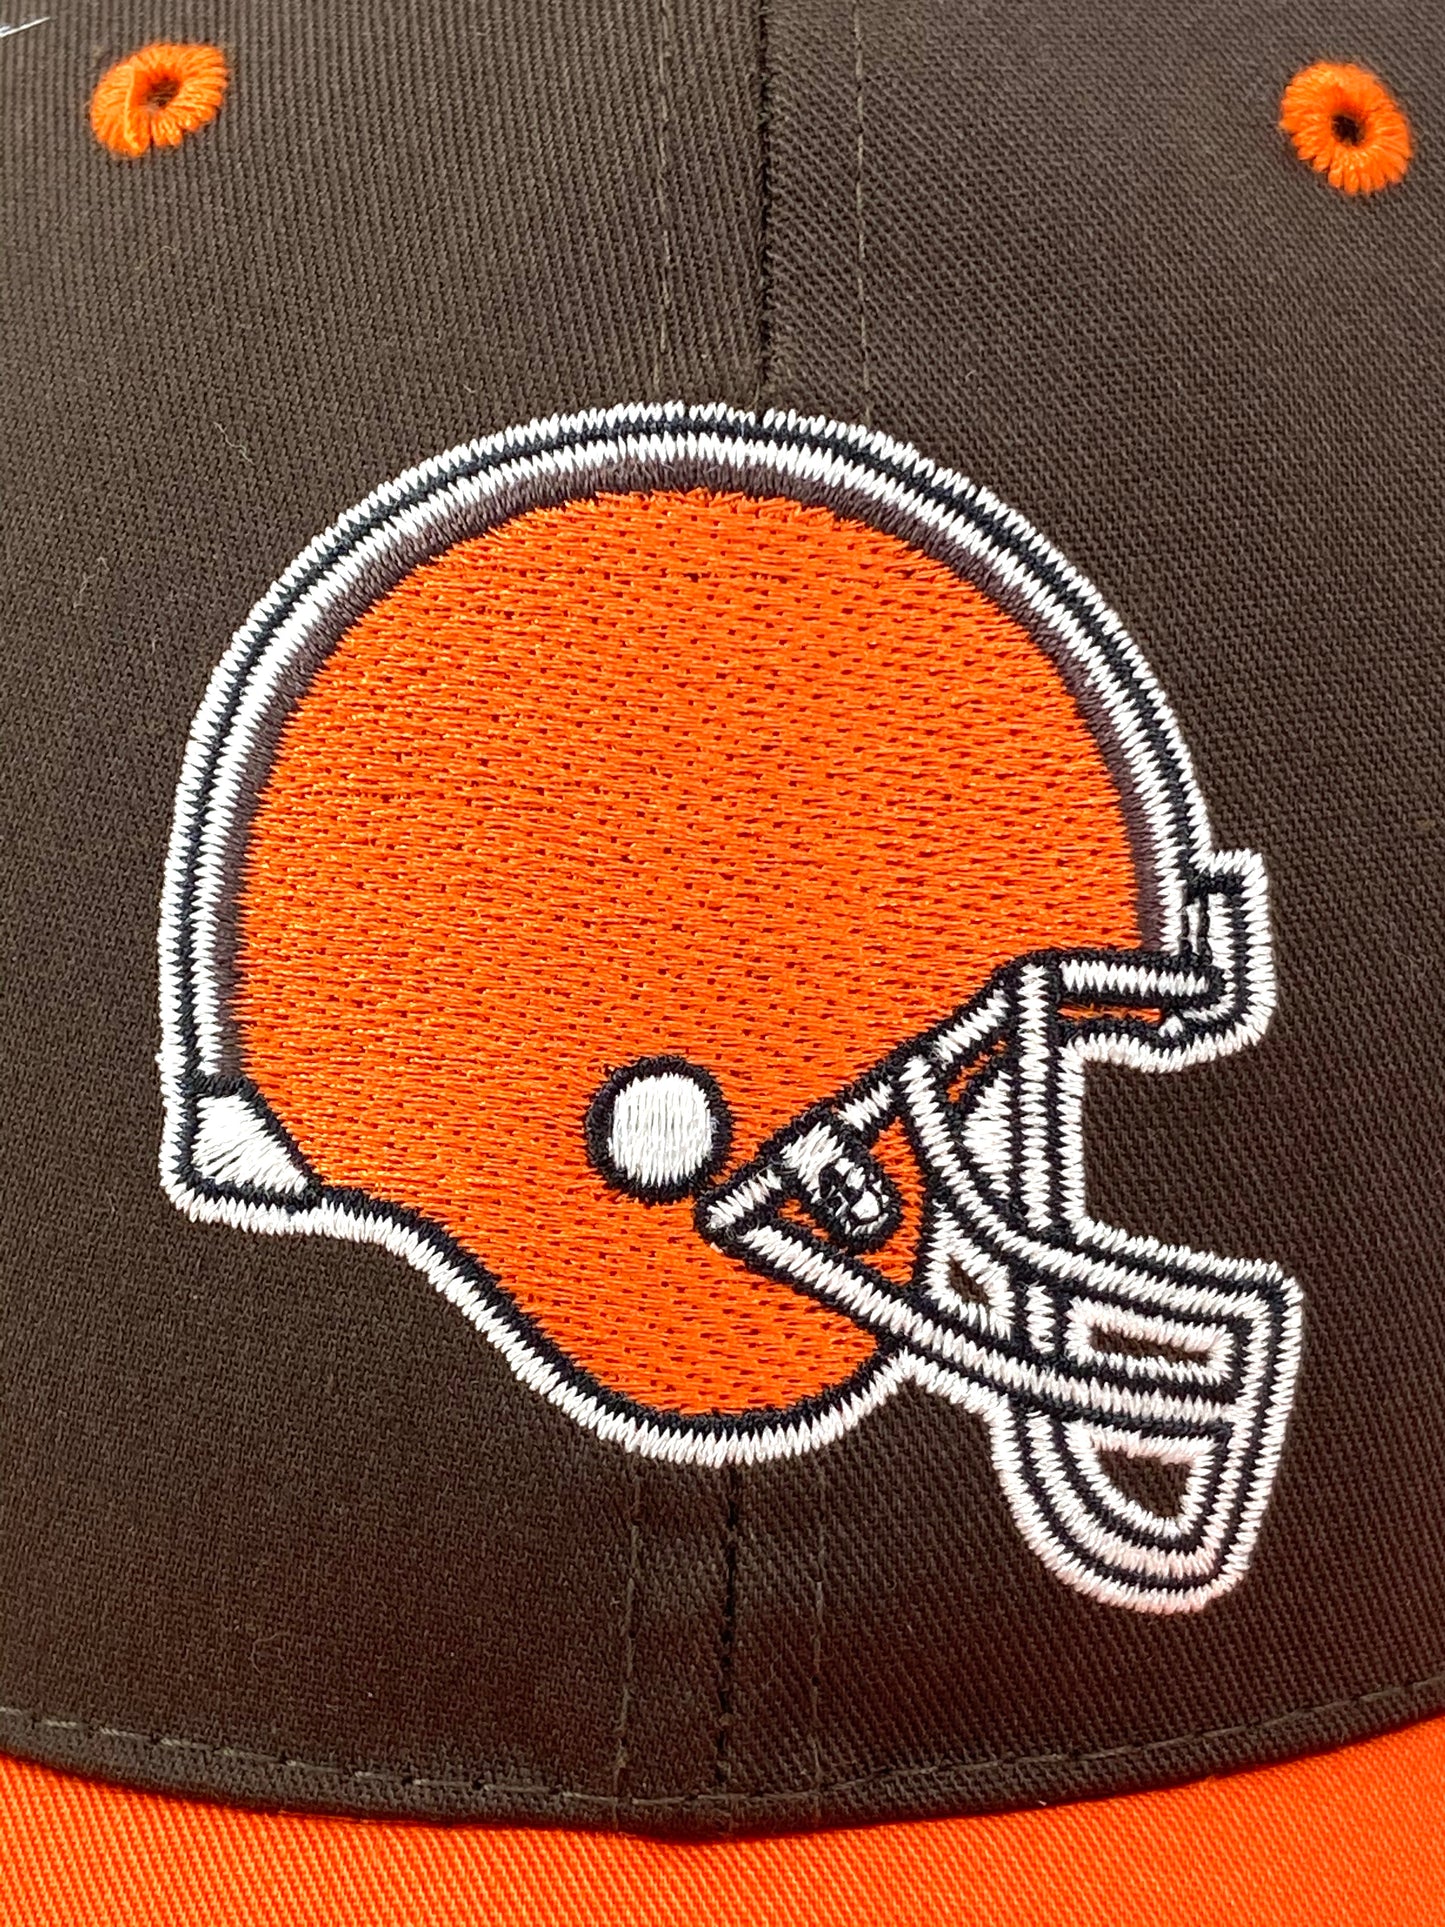 Cleveland Browns Vintage NFL Team Color Replica Snapback by Twins Enterprise